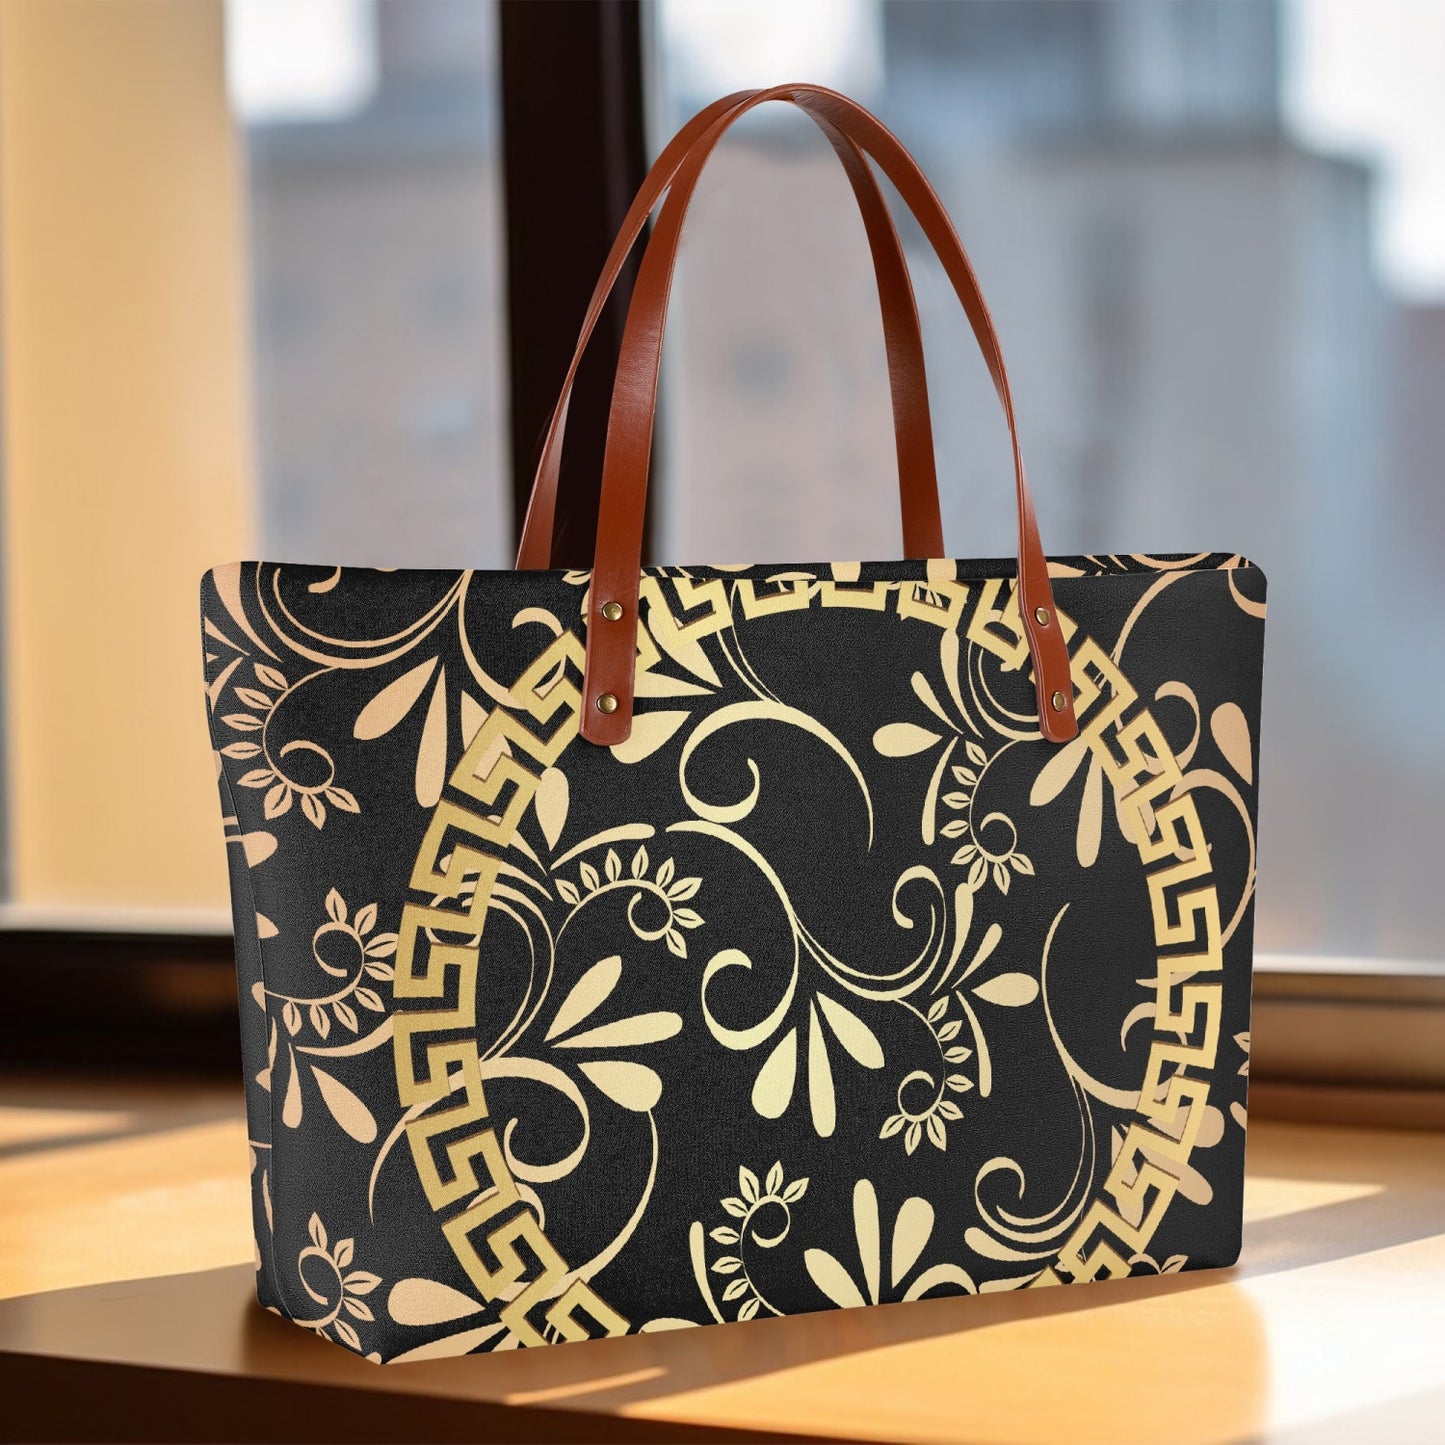 Greek art floral background handbag. Classic Diving Cloth Tote Bag